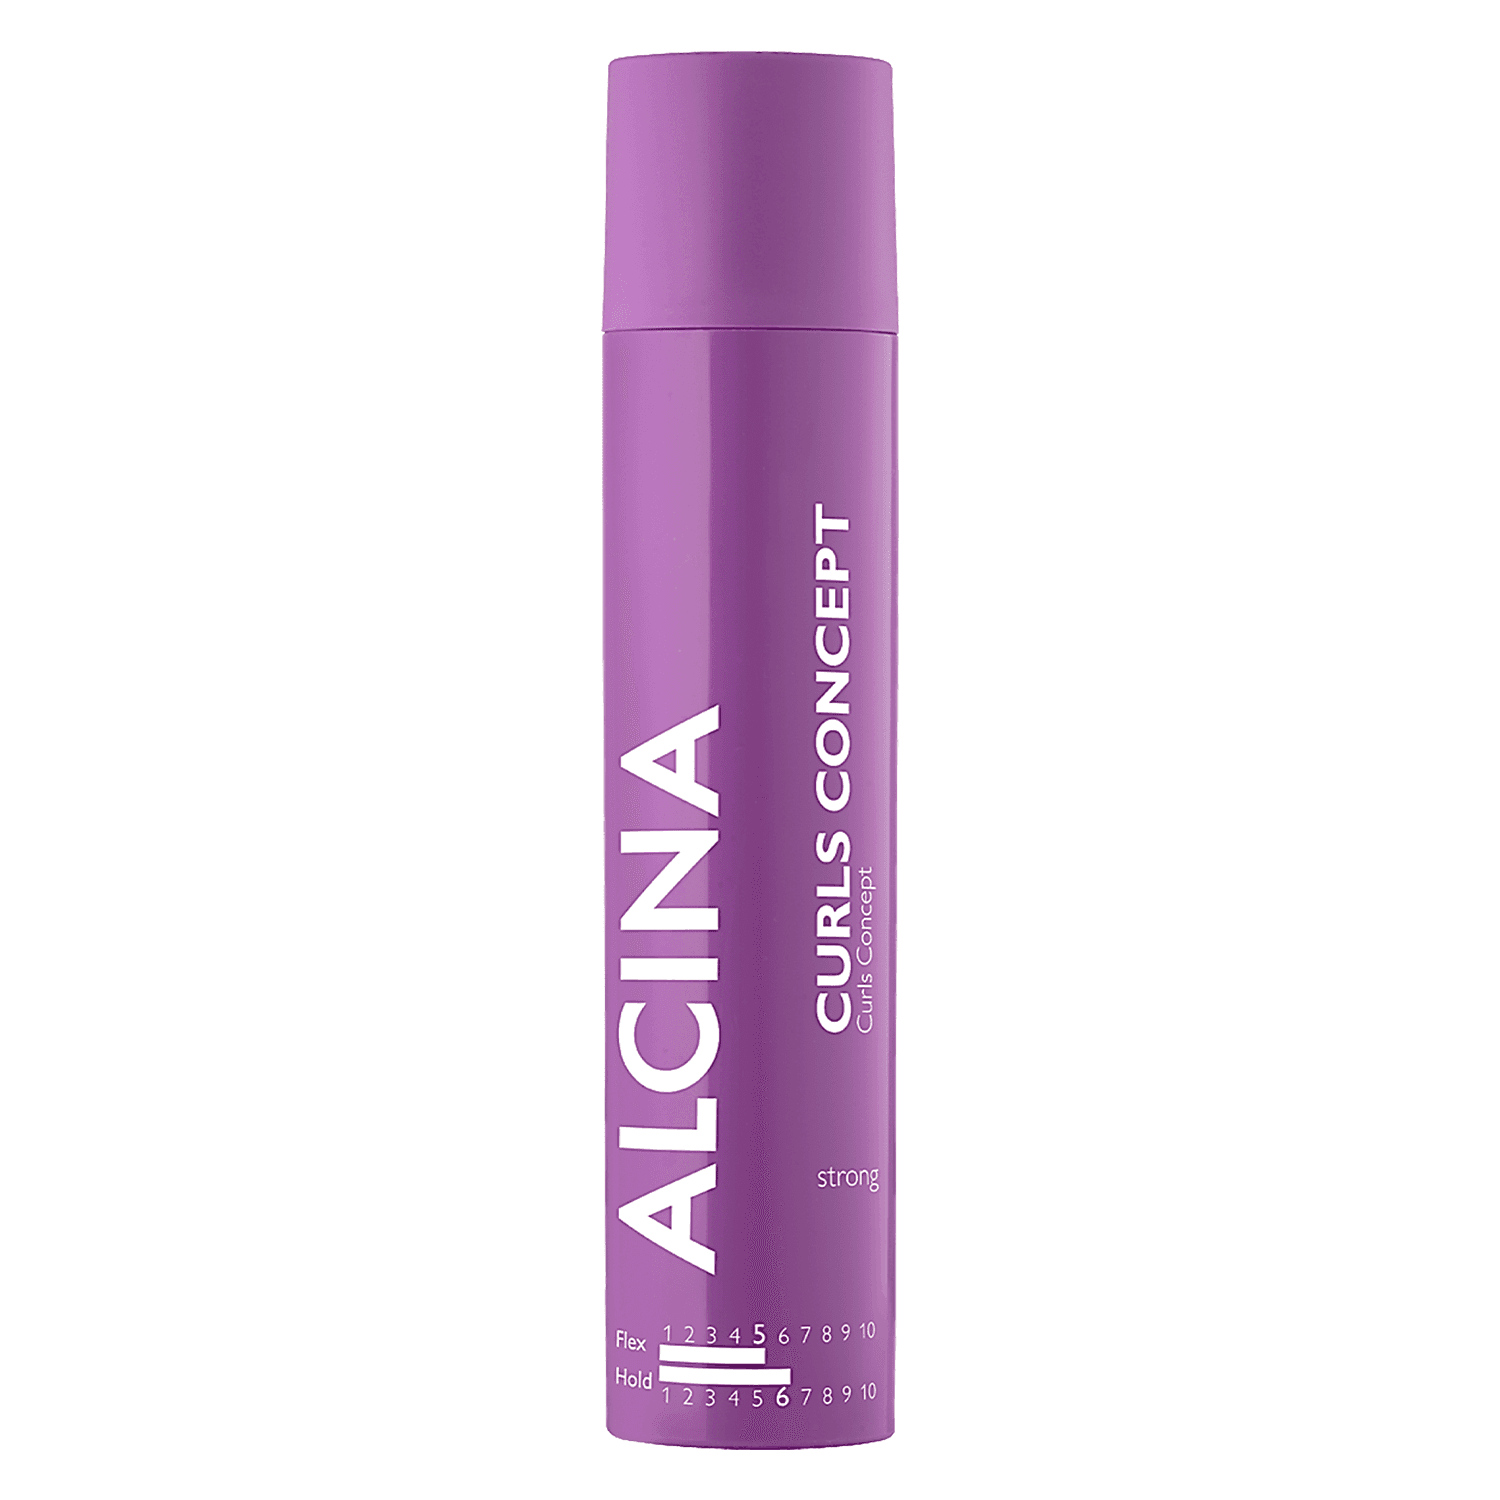 Alcina Strong - Curls Concept